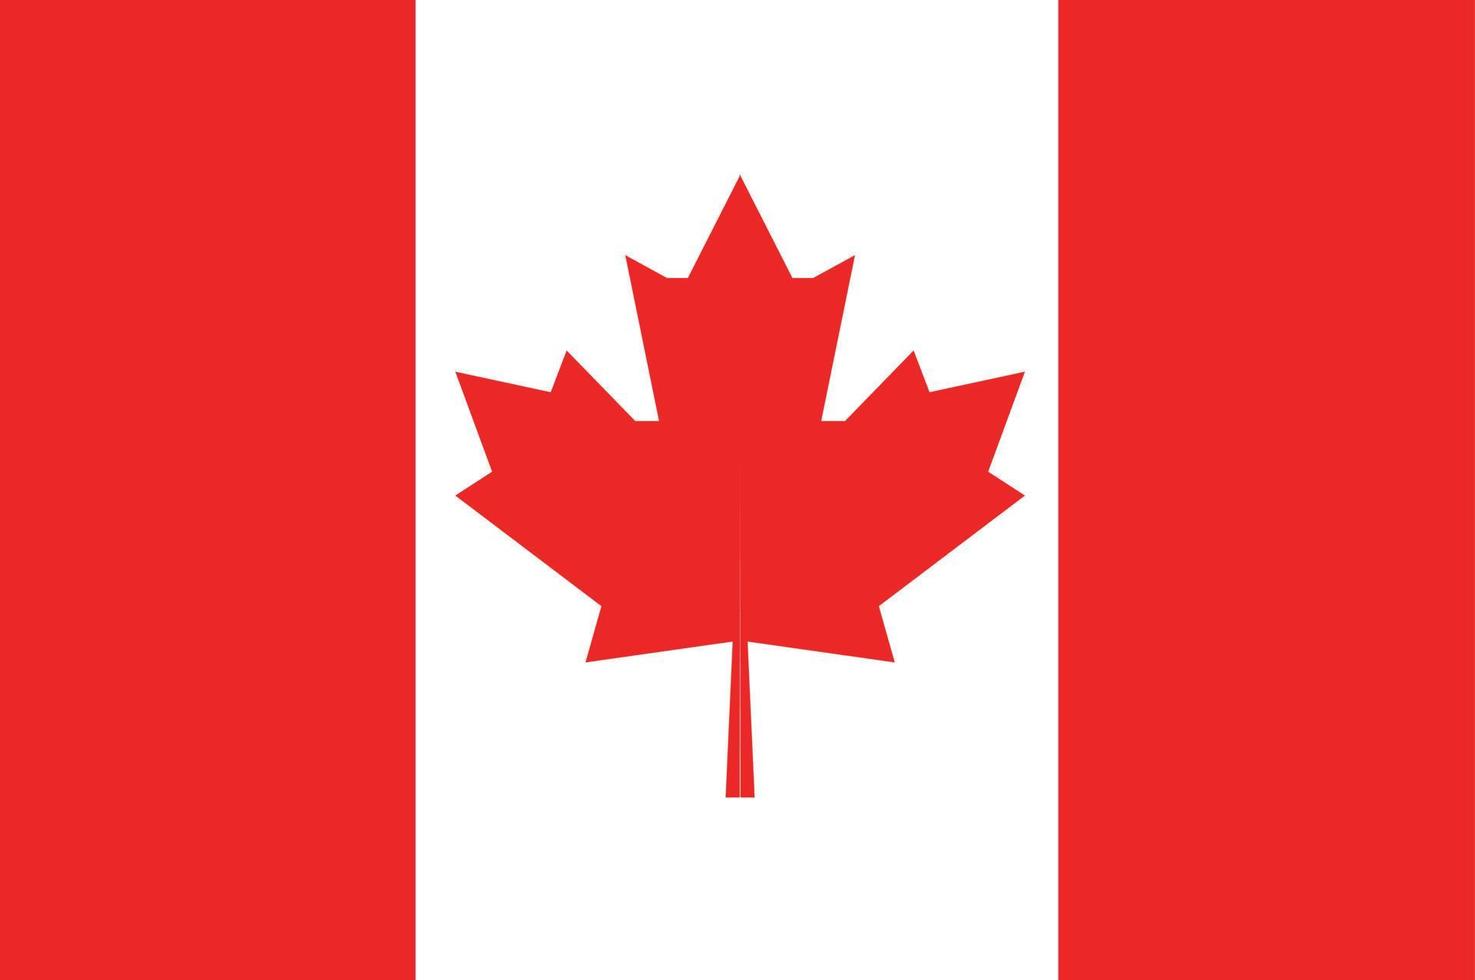 Canada nationaal officieel vlag symbool, banier vector illustratie.